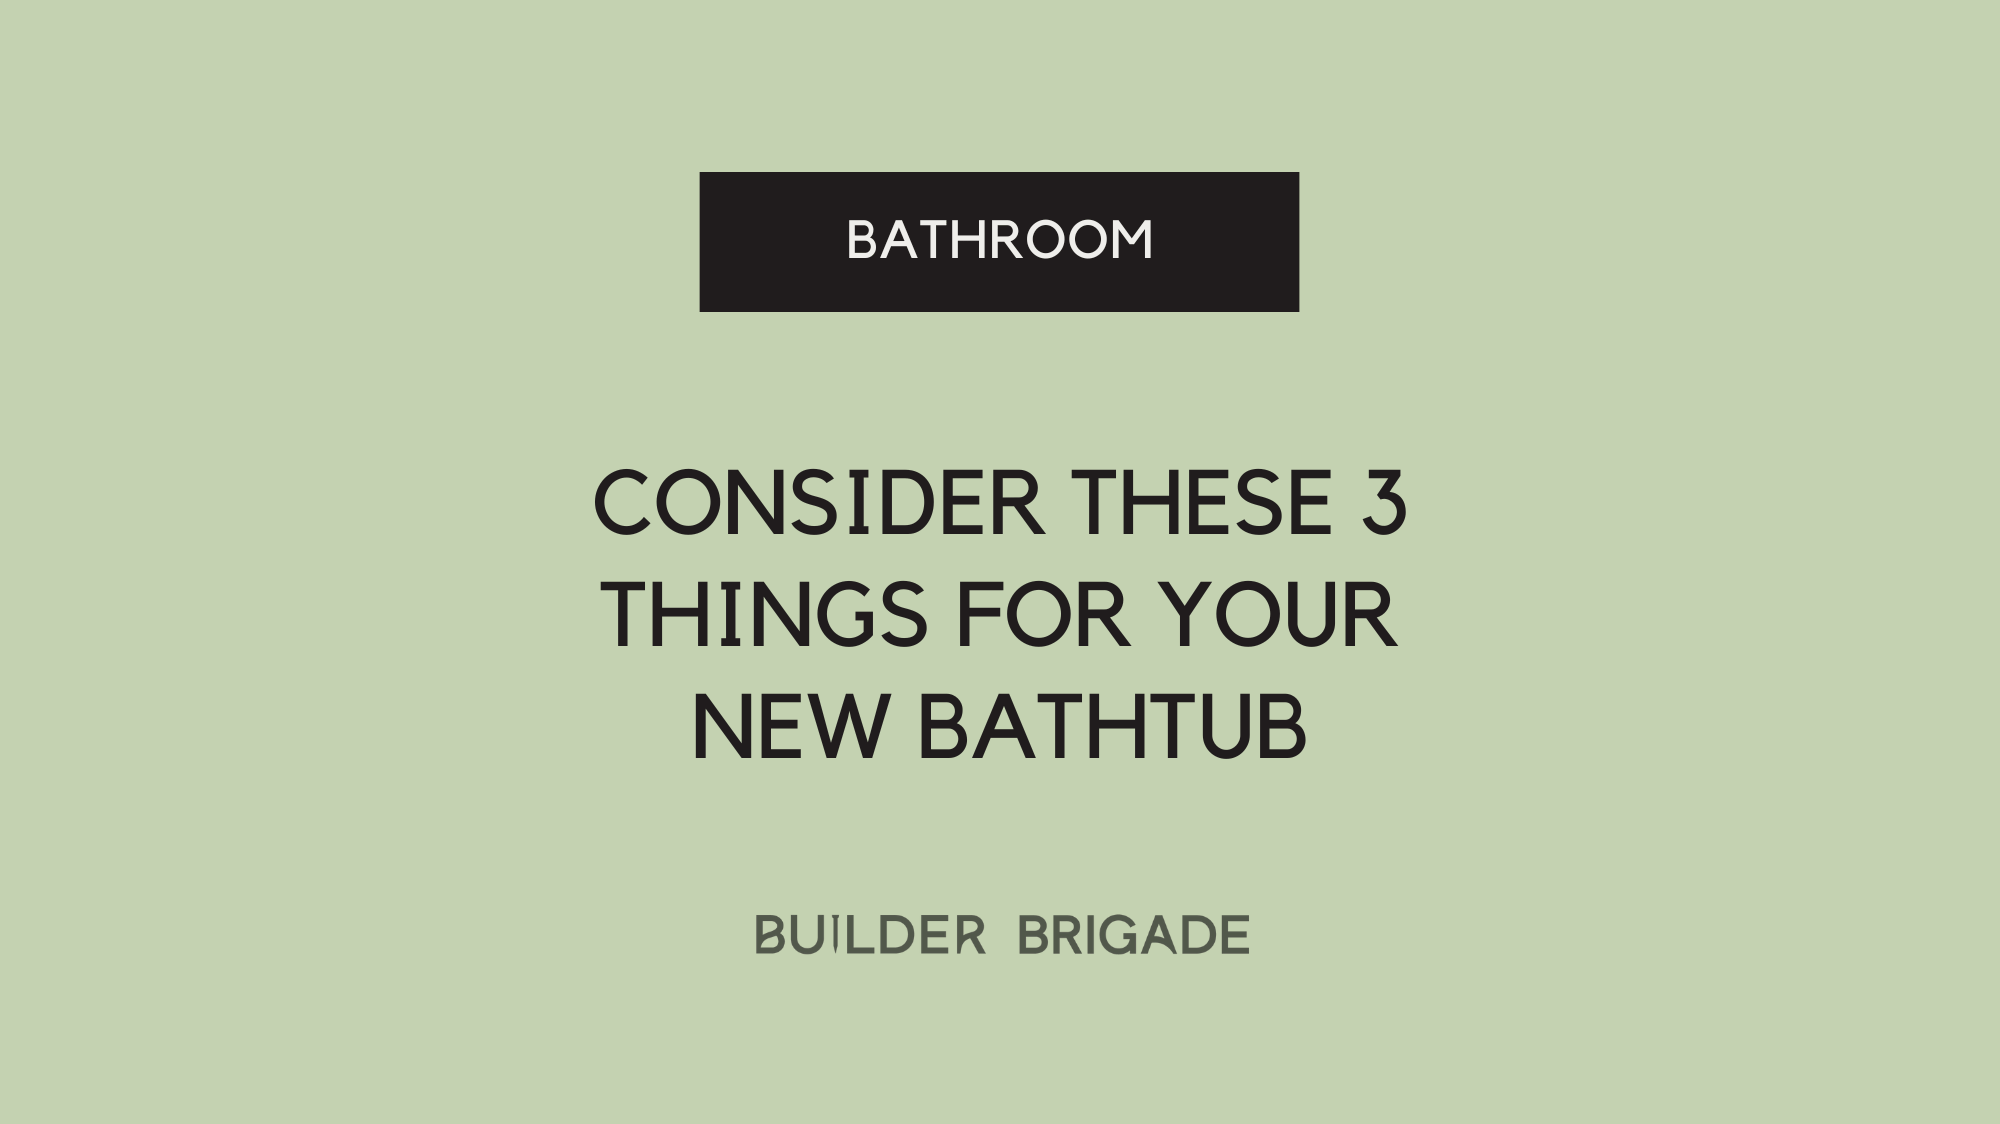 Consider these 3 things when choosing a bathtub